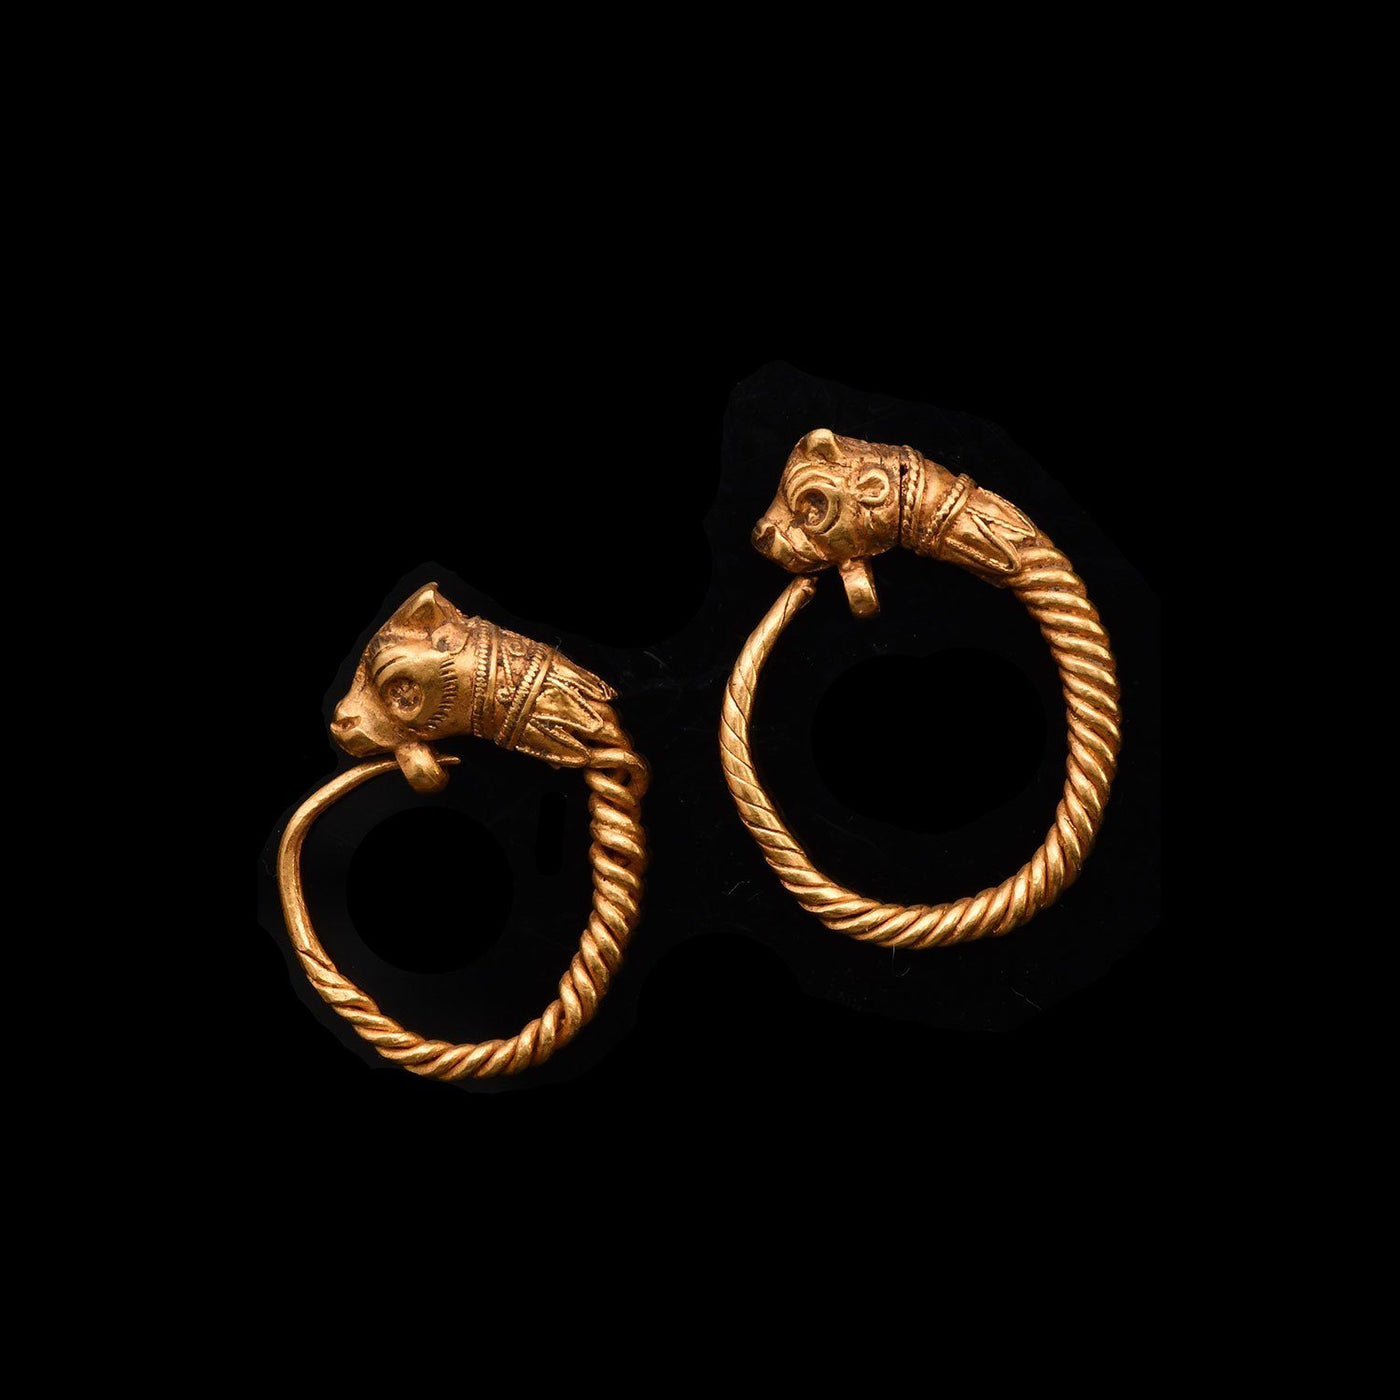 A fine pair of Greek Antelope Earrings, Hellenistic Period, ca. 3rd